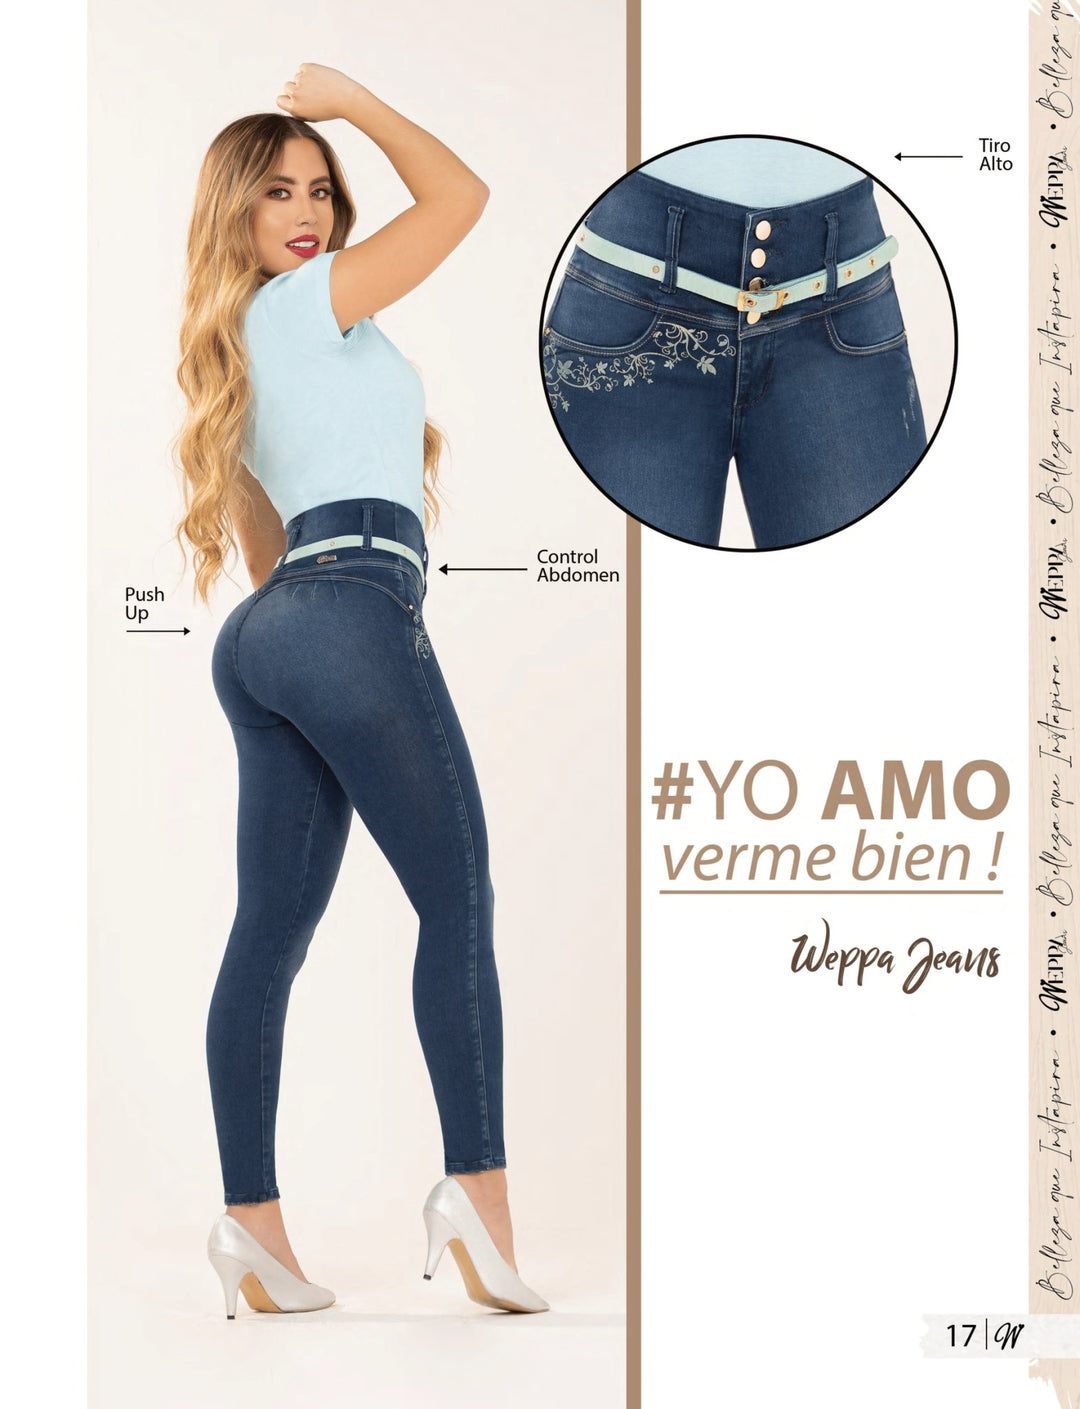 Jeans de Tiro Alto, Flashy Colombia